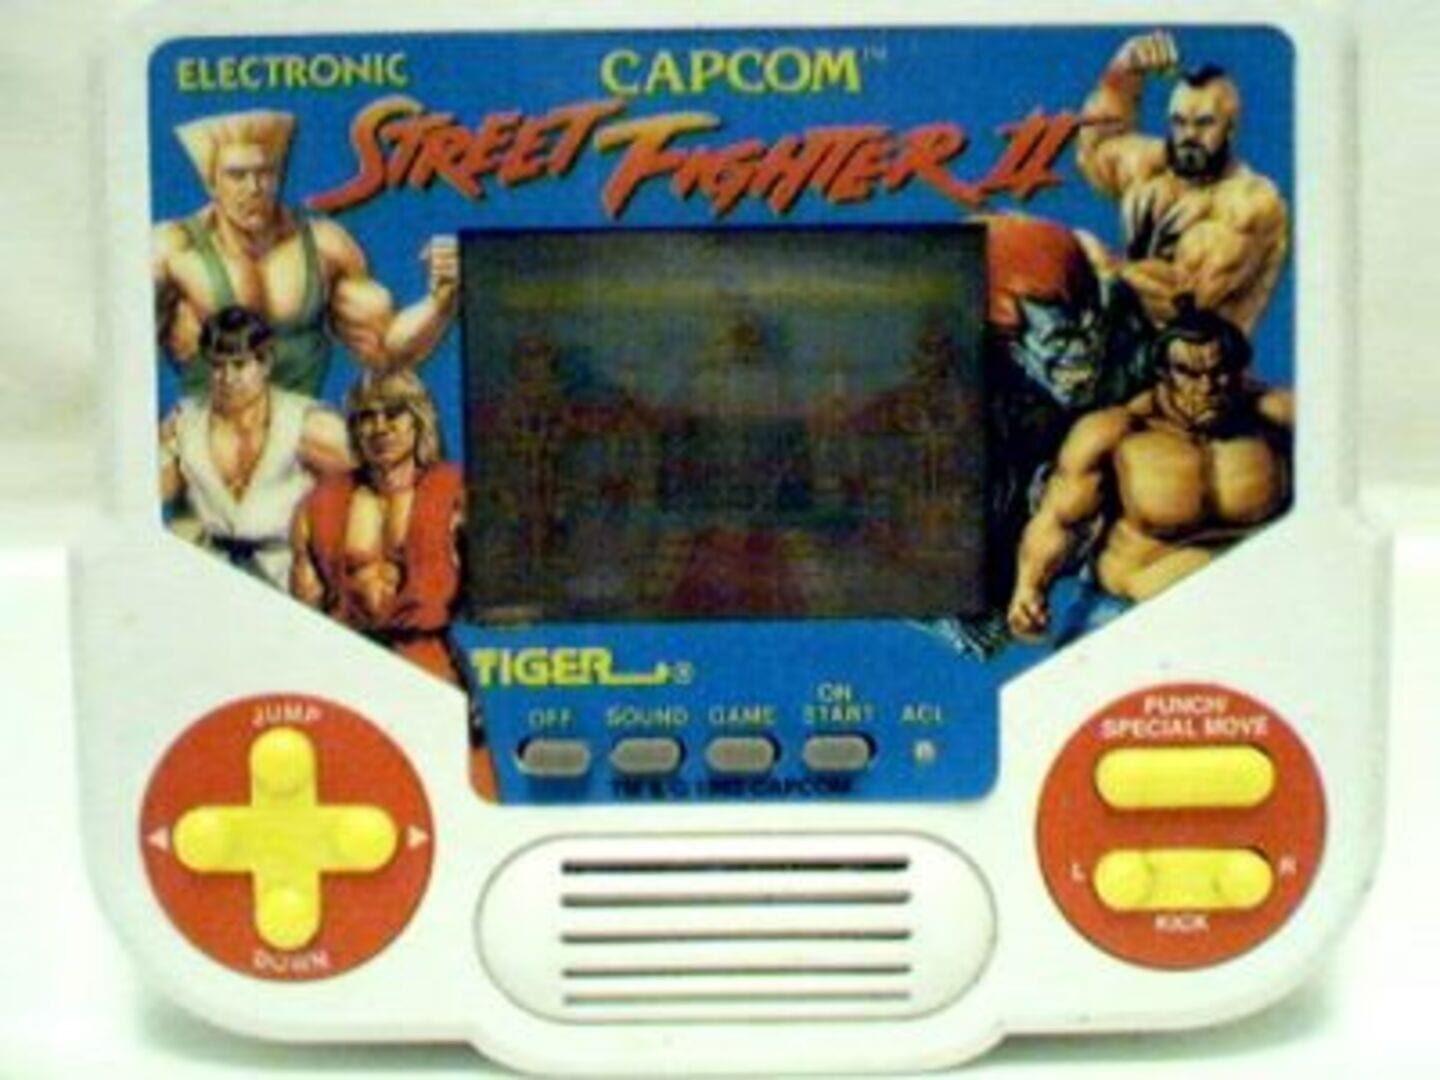 Street Fighter II cover art